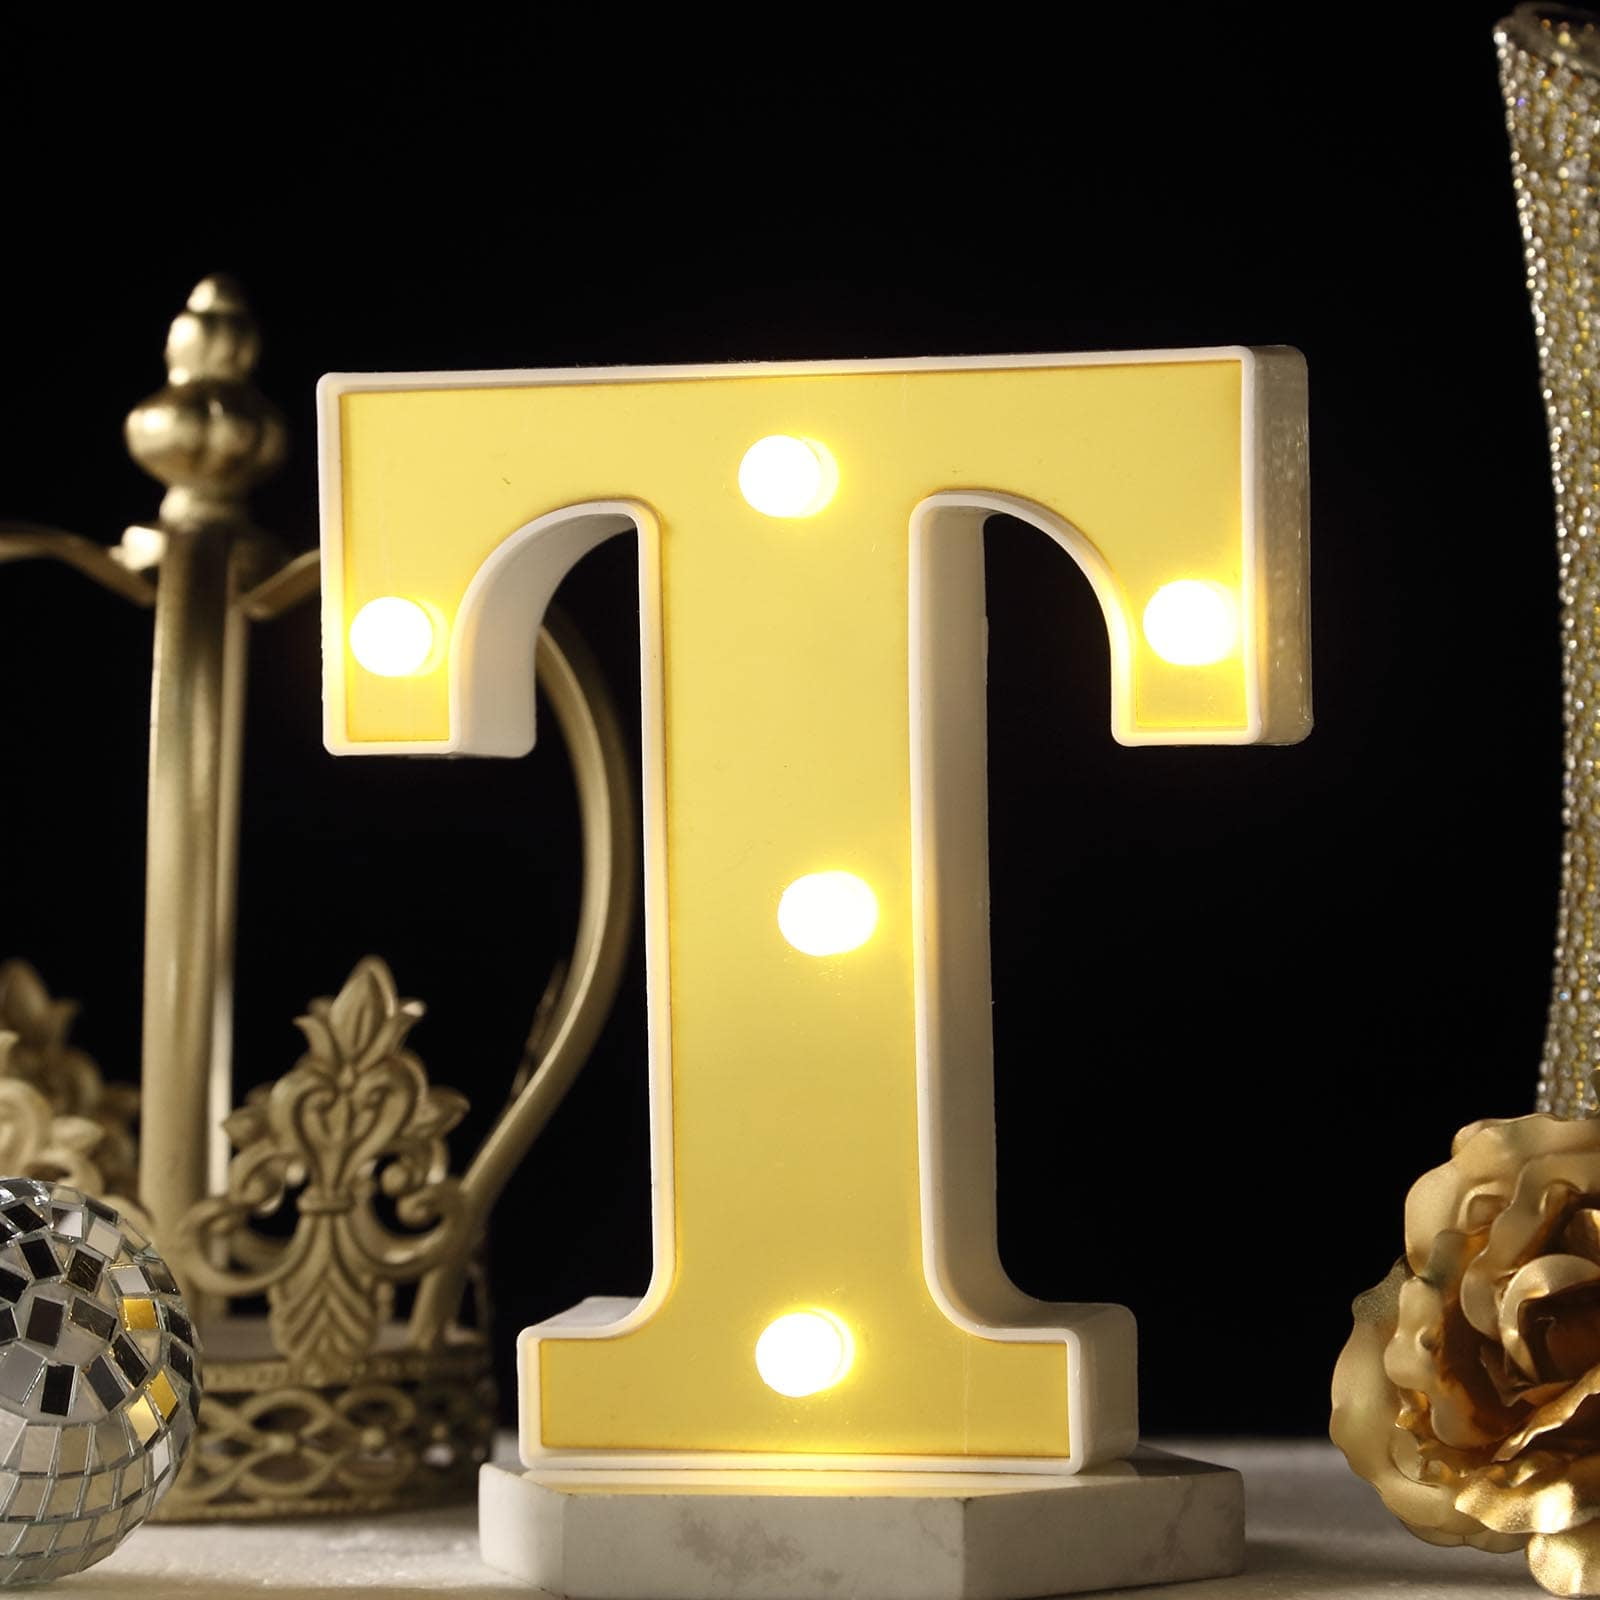 Efavormart 6 3D Gold Marquee Letters 5 LED Light Up Letters Warm White LED Letter Lights R 